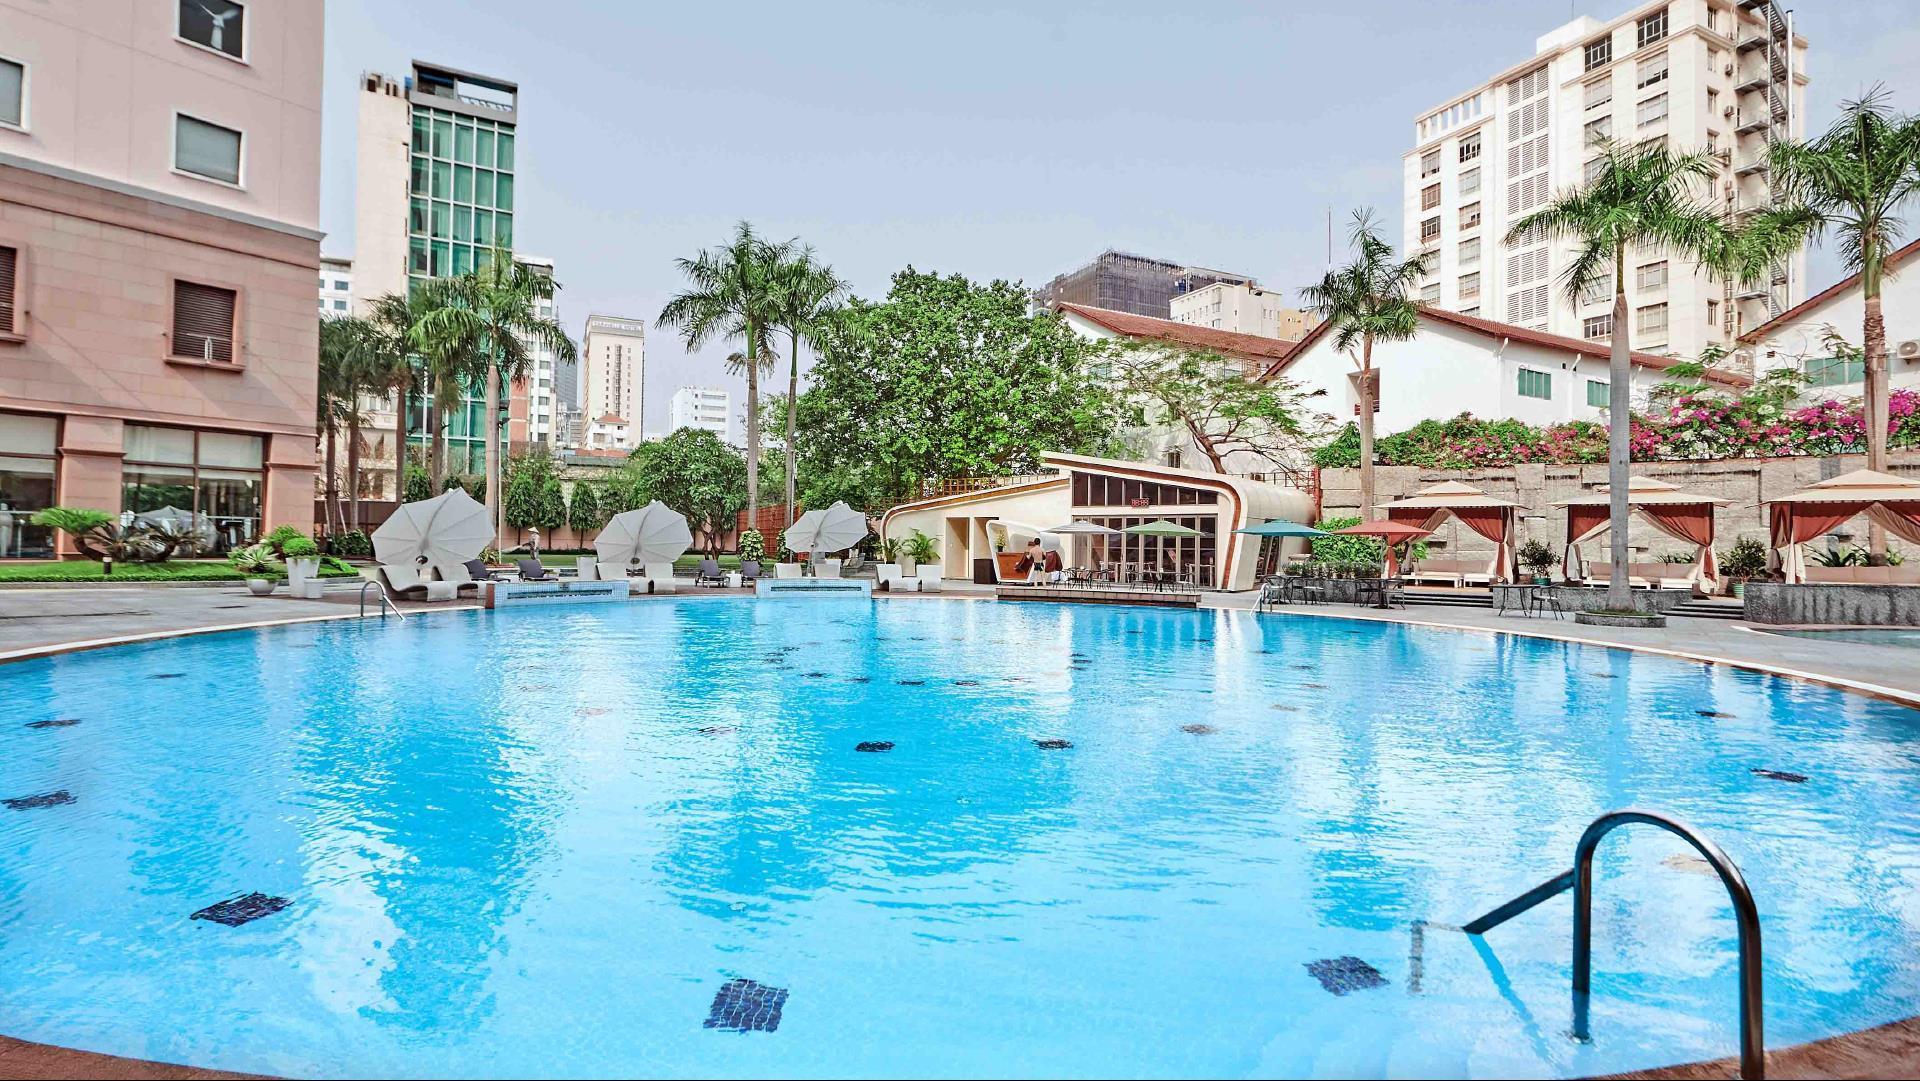 LOTTE Hotel Saigon in Ho Chi Minh City, VN